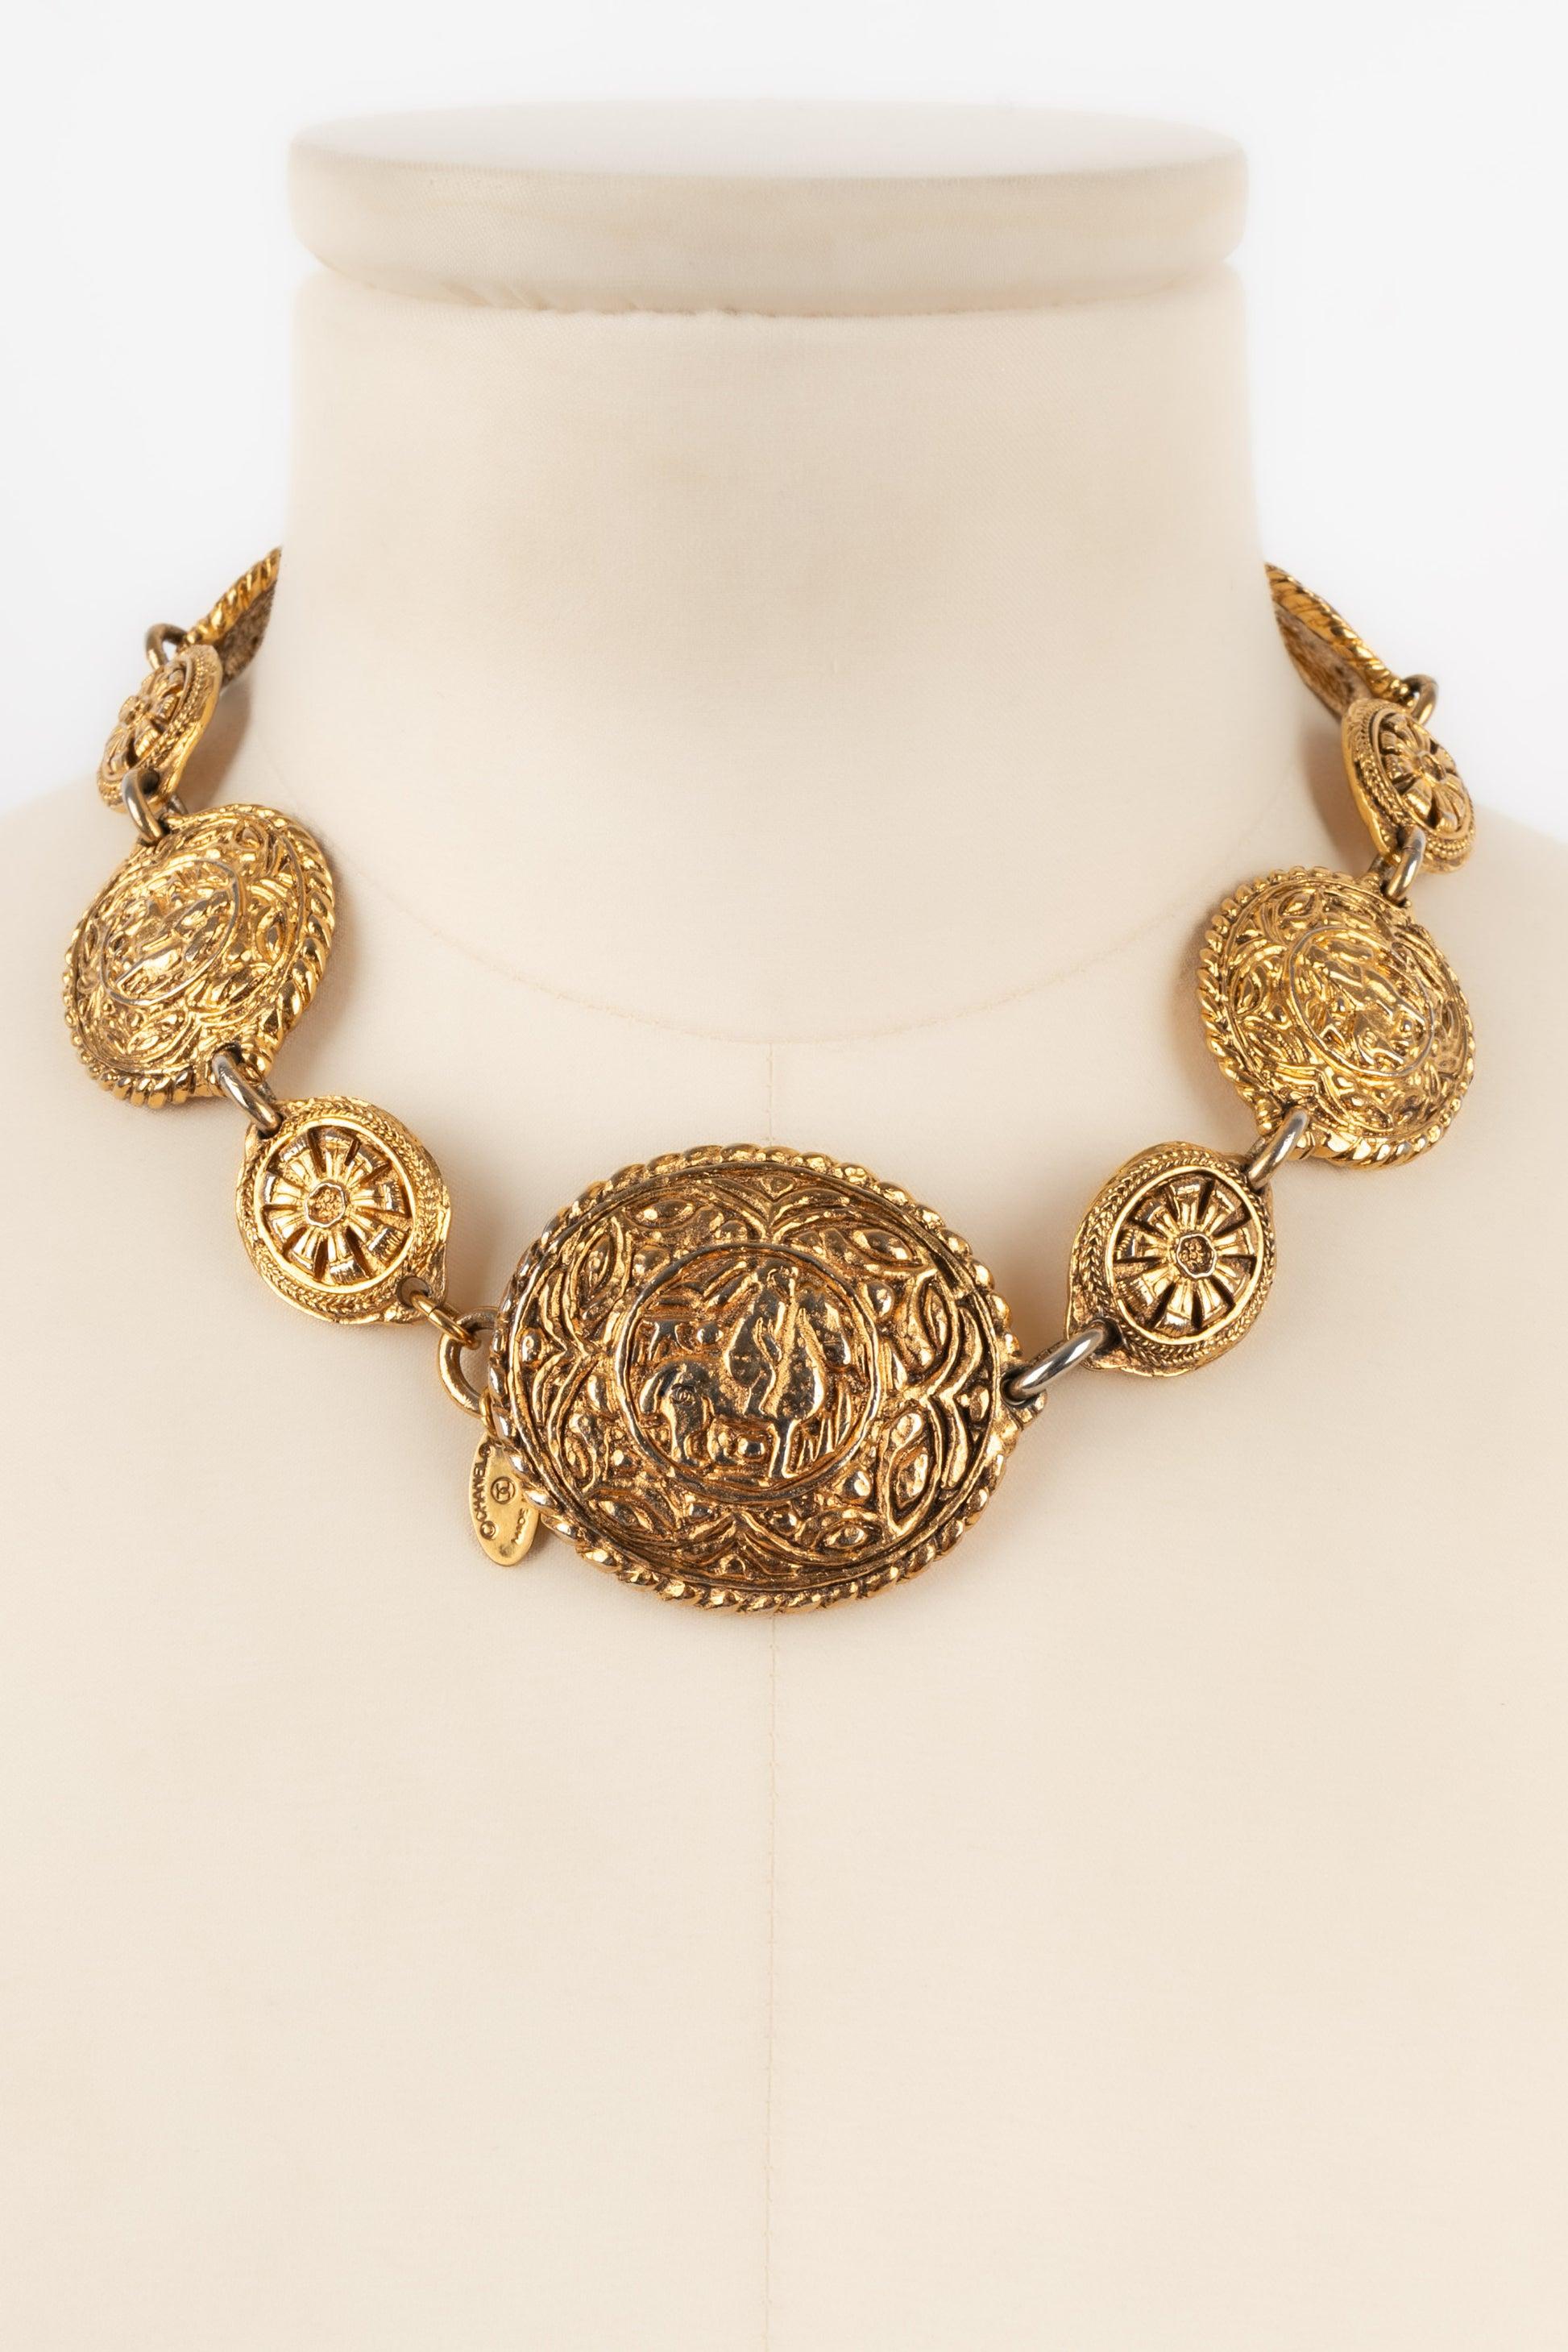 Women's Chanel Golden Short Necklace, 1980s For Sale